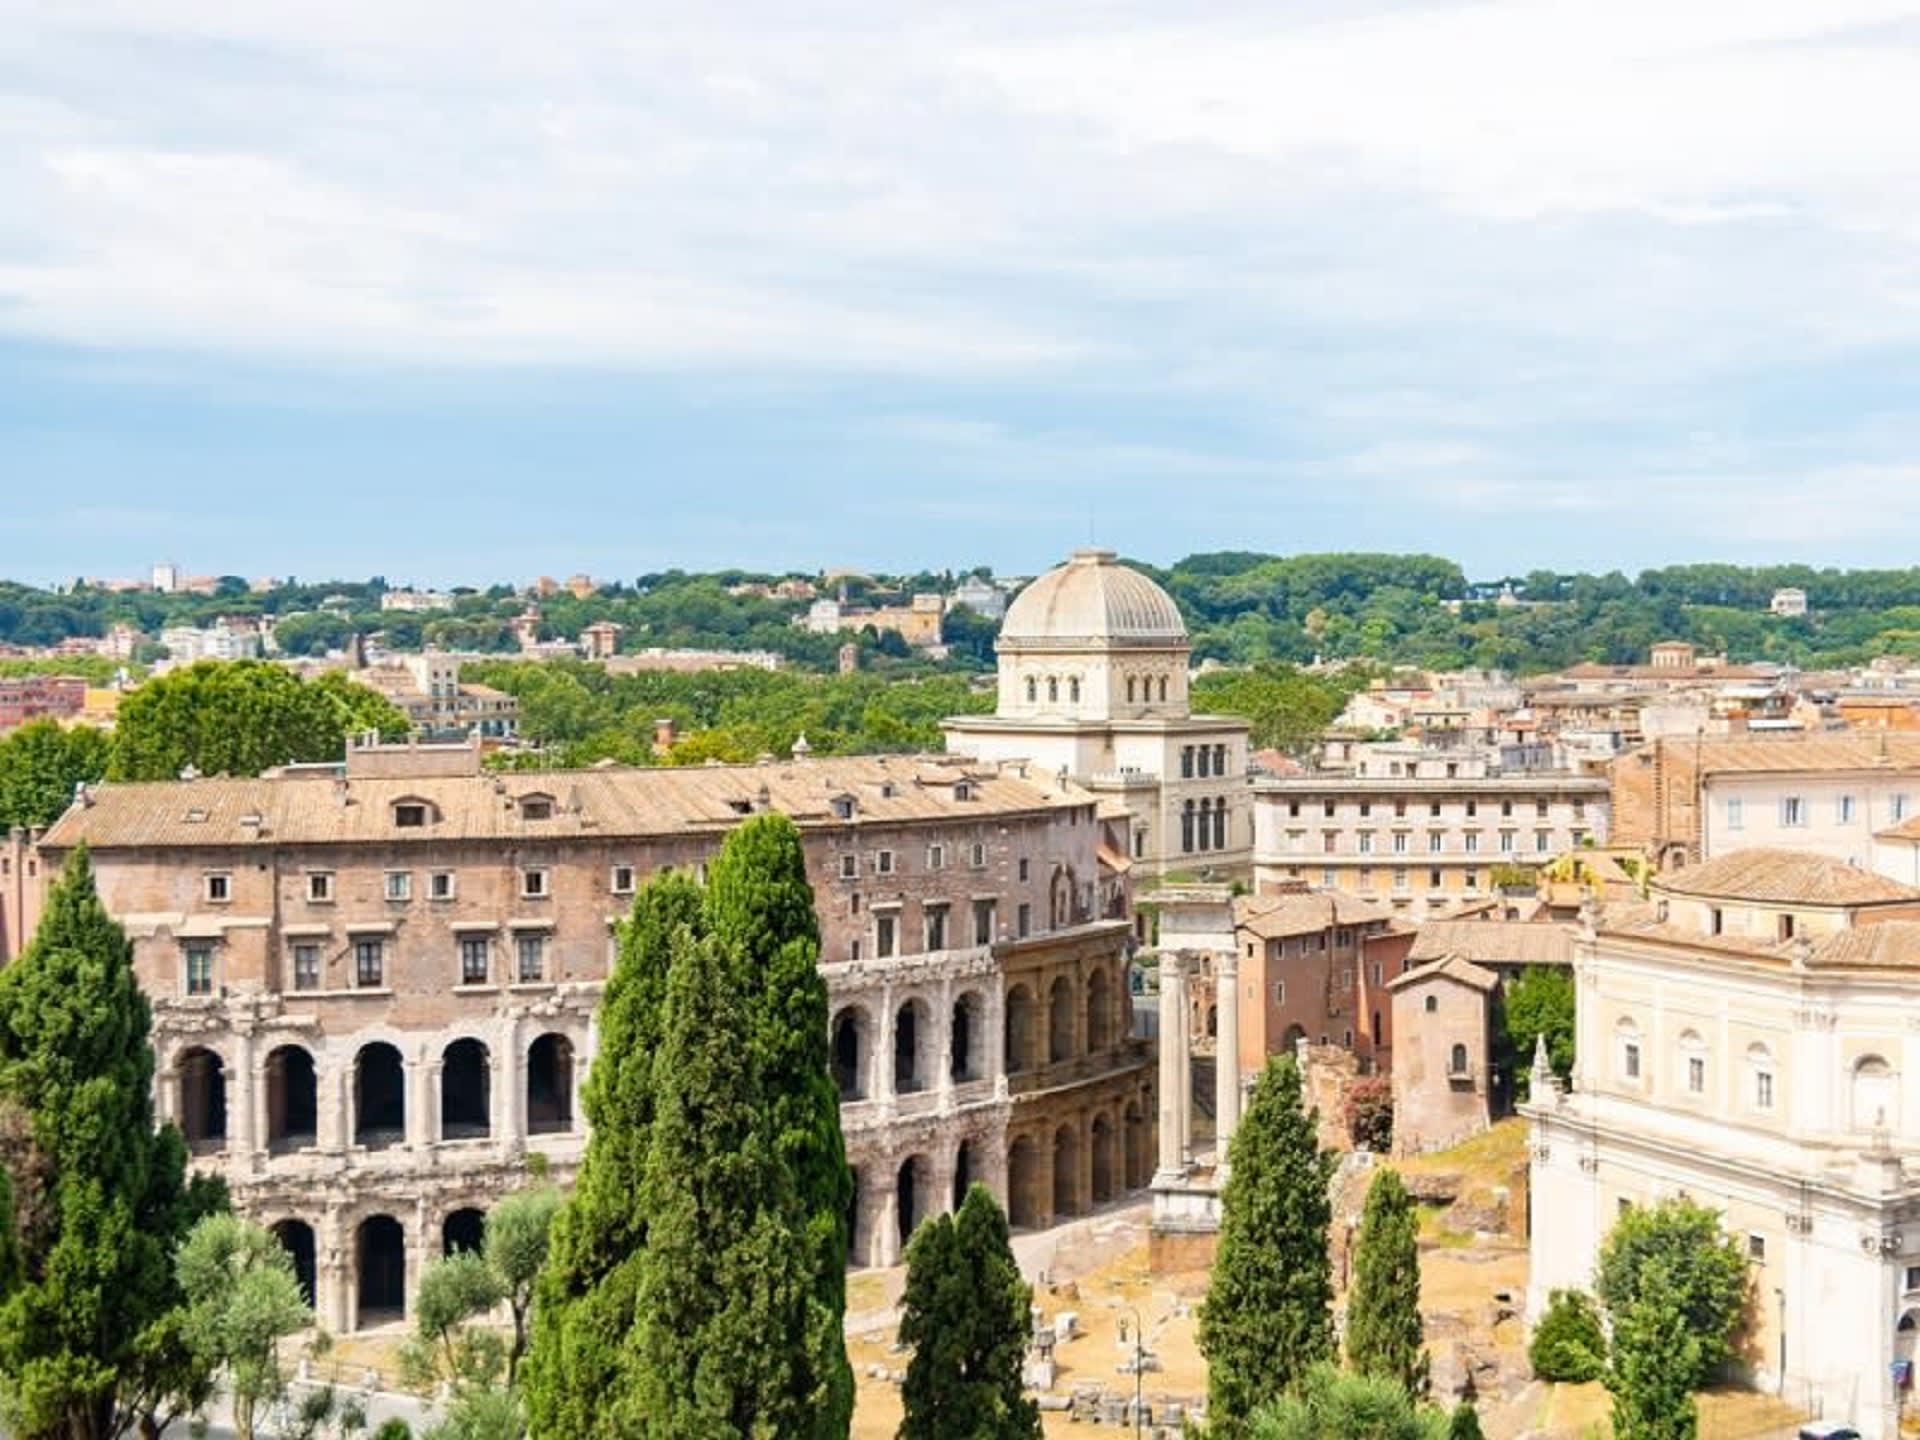 Tour of the Jewish Ghetto of Rome